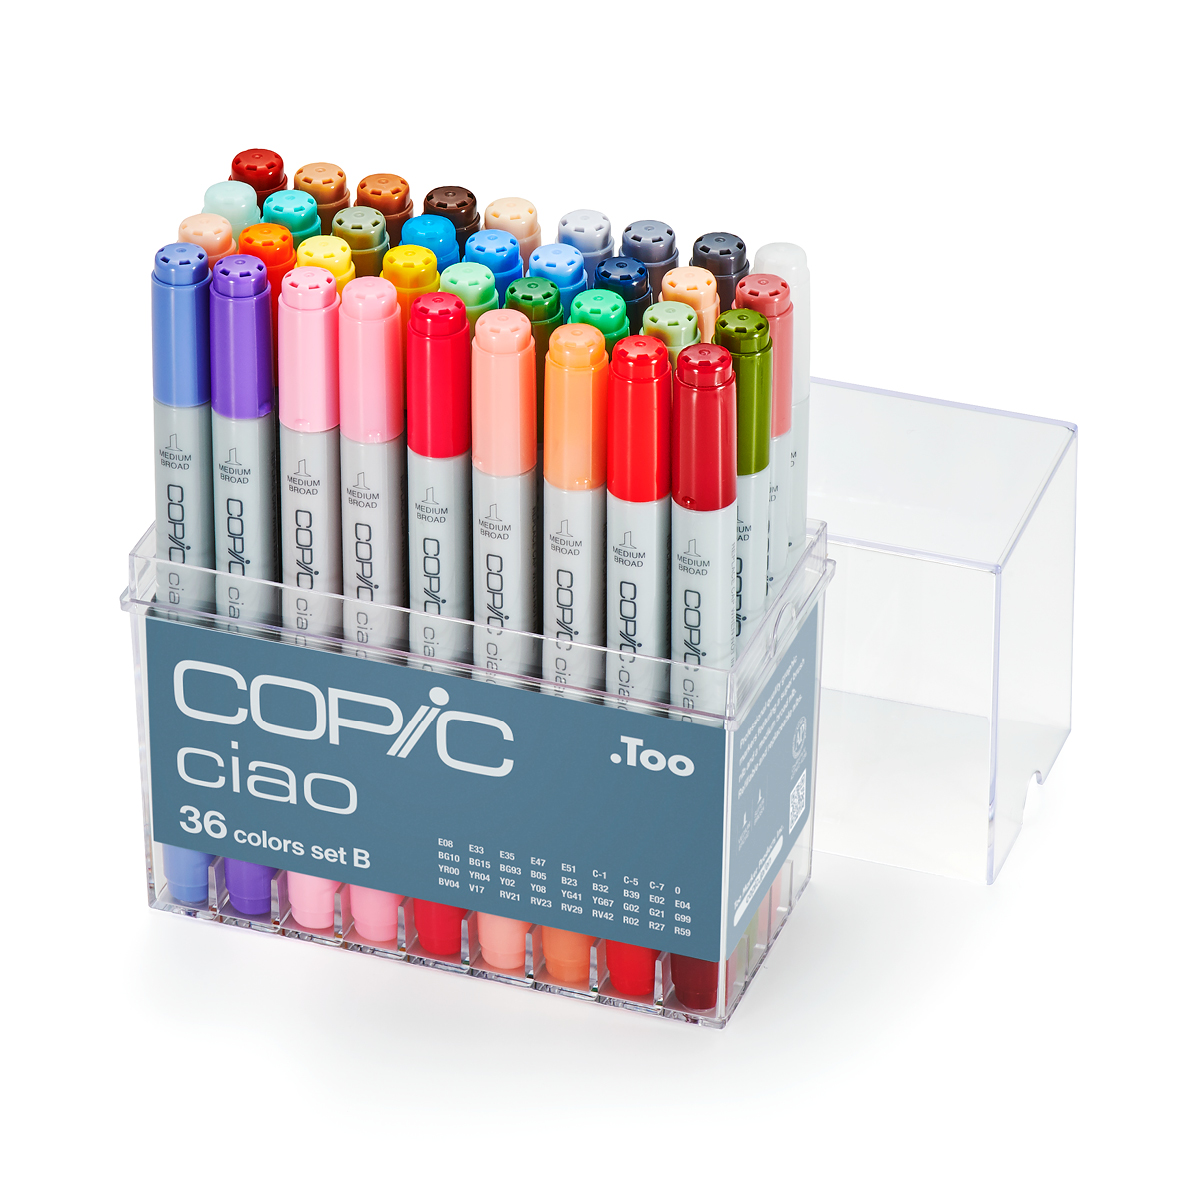 Copic Ciao 72 colors set B - COPIC Official Website